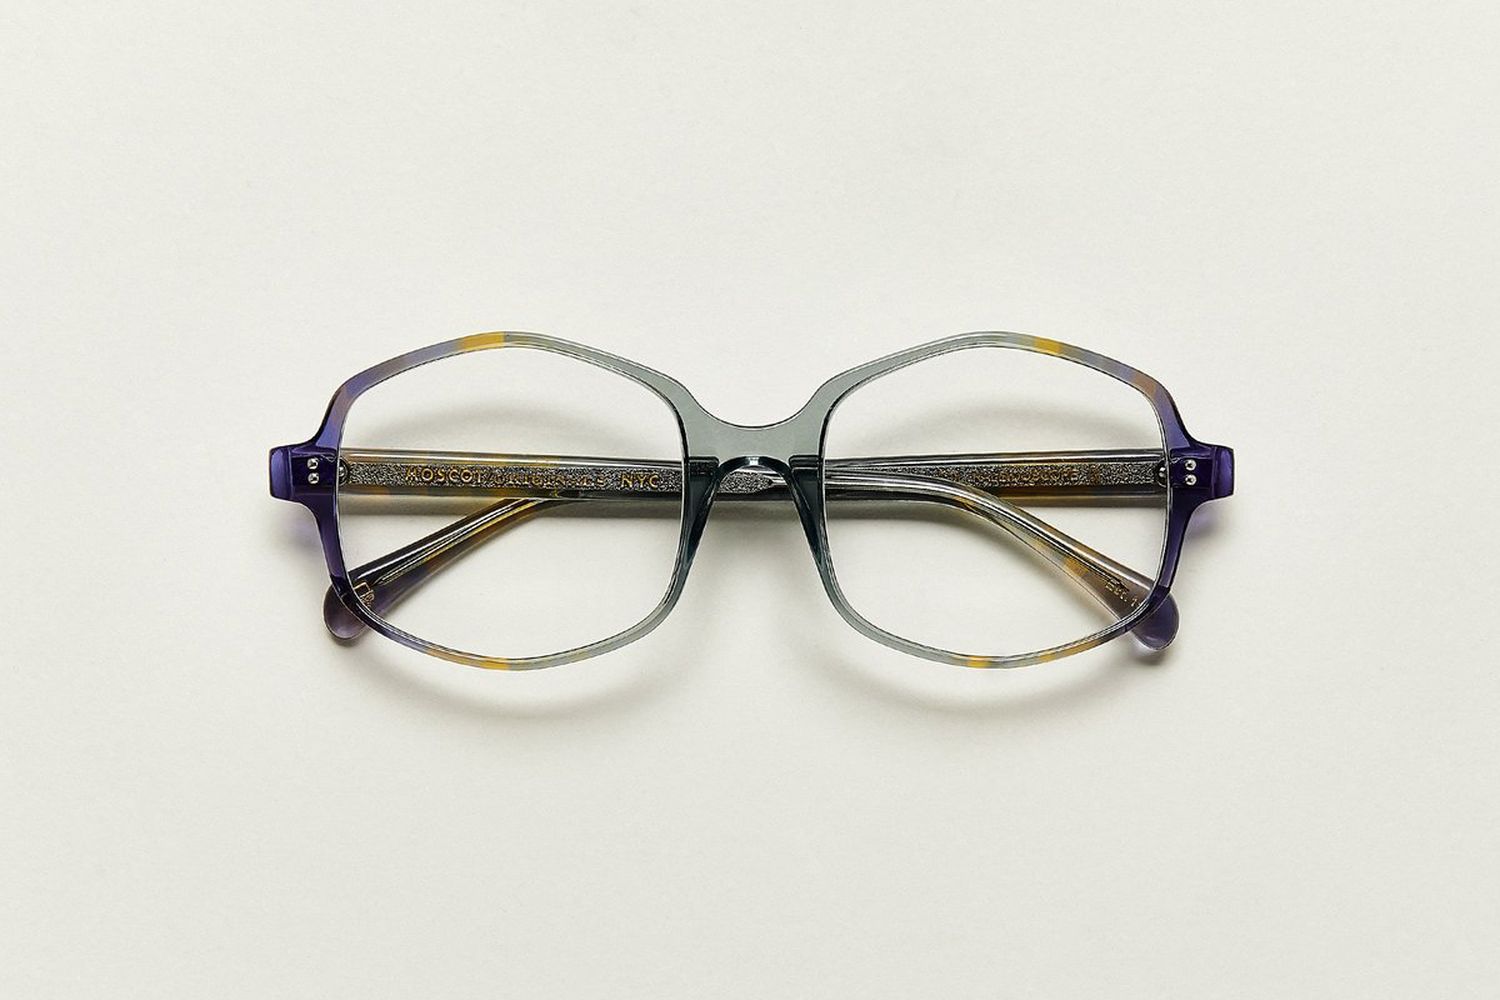 Yente Glasses